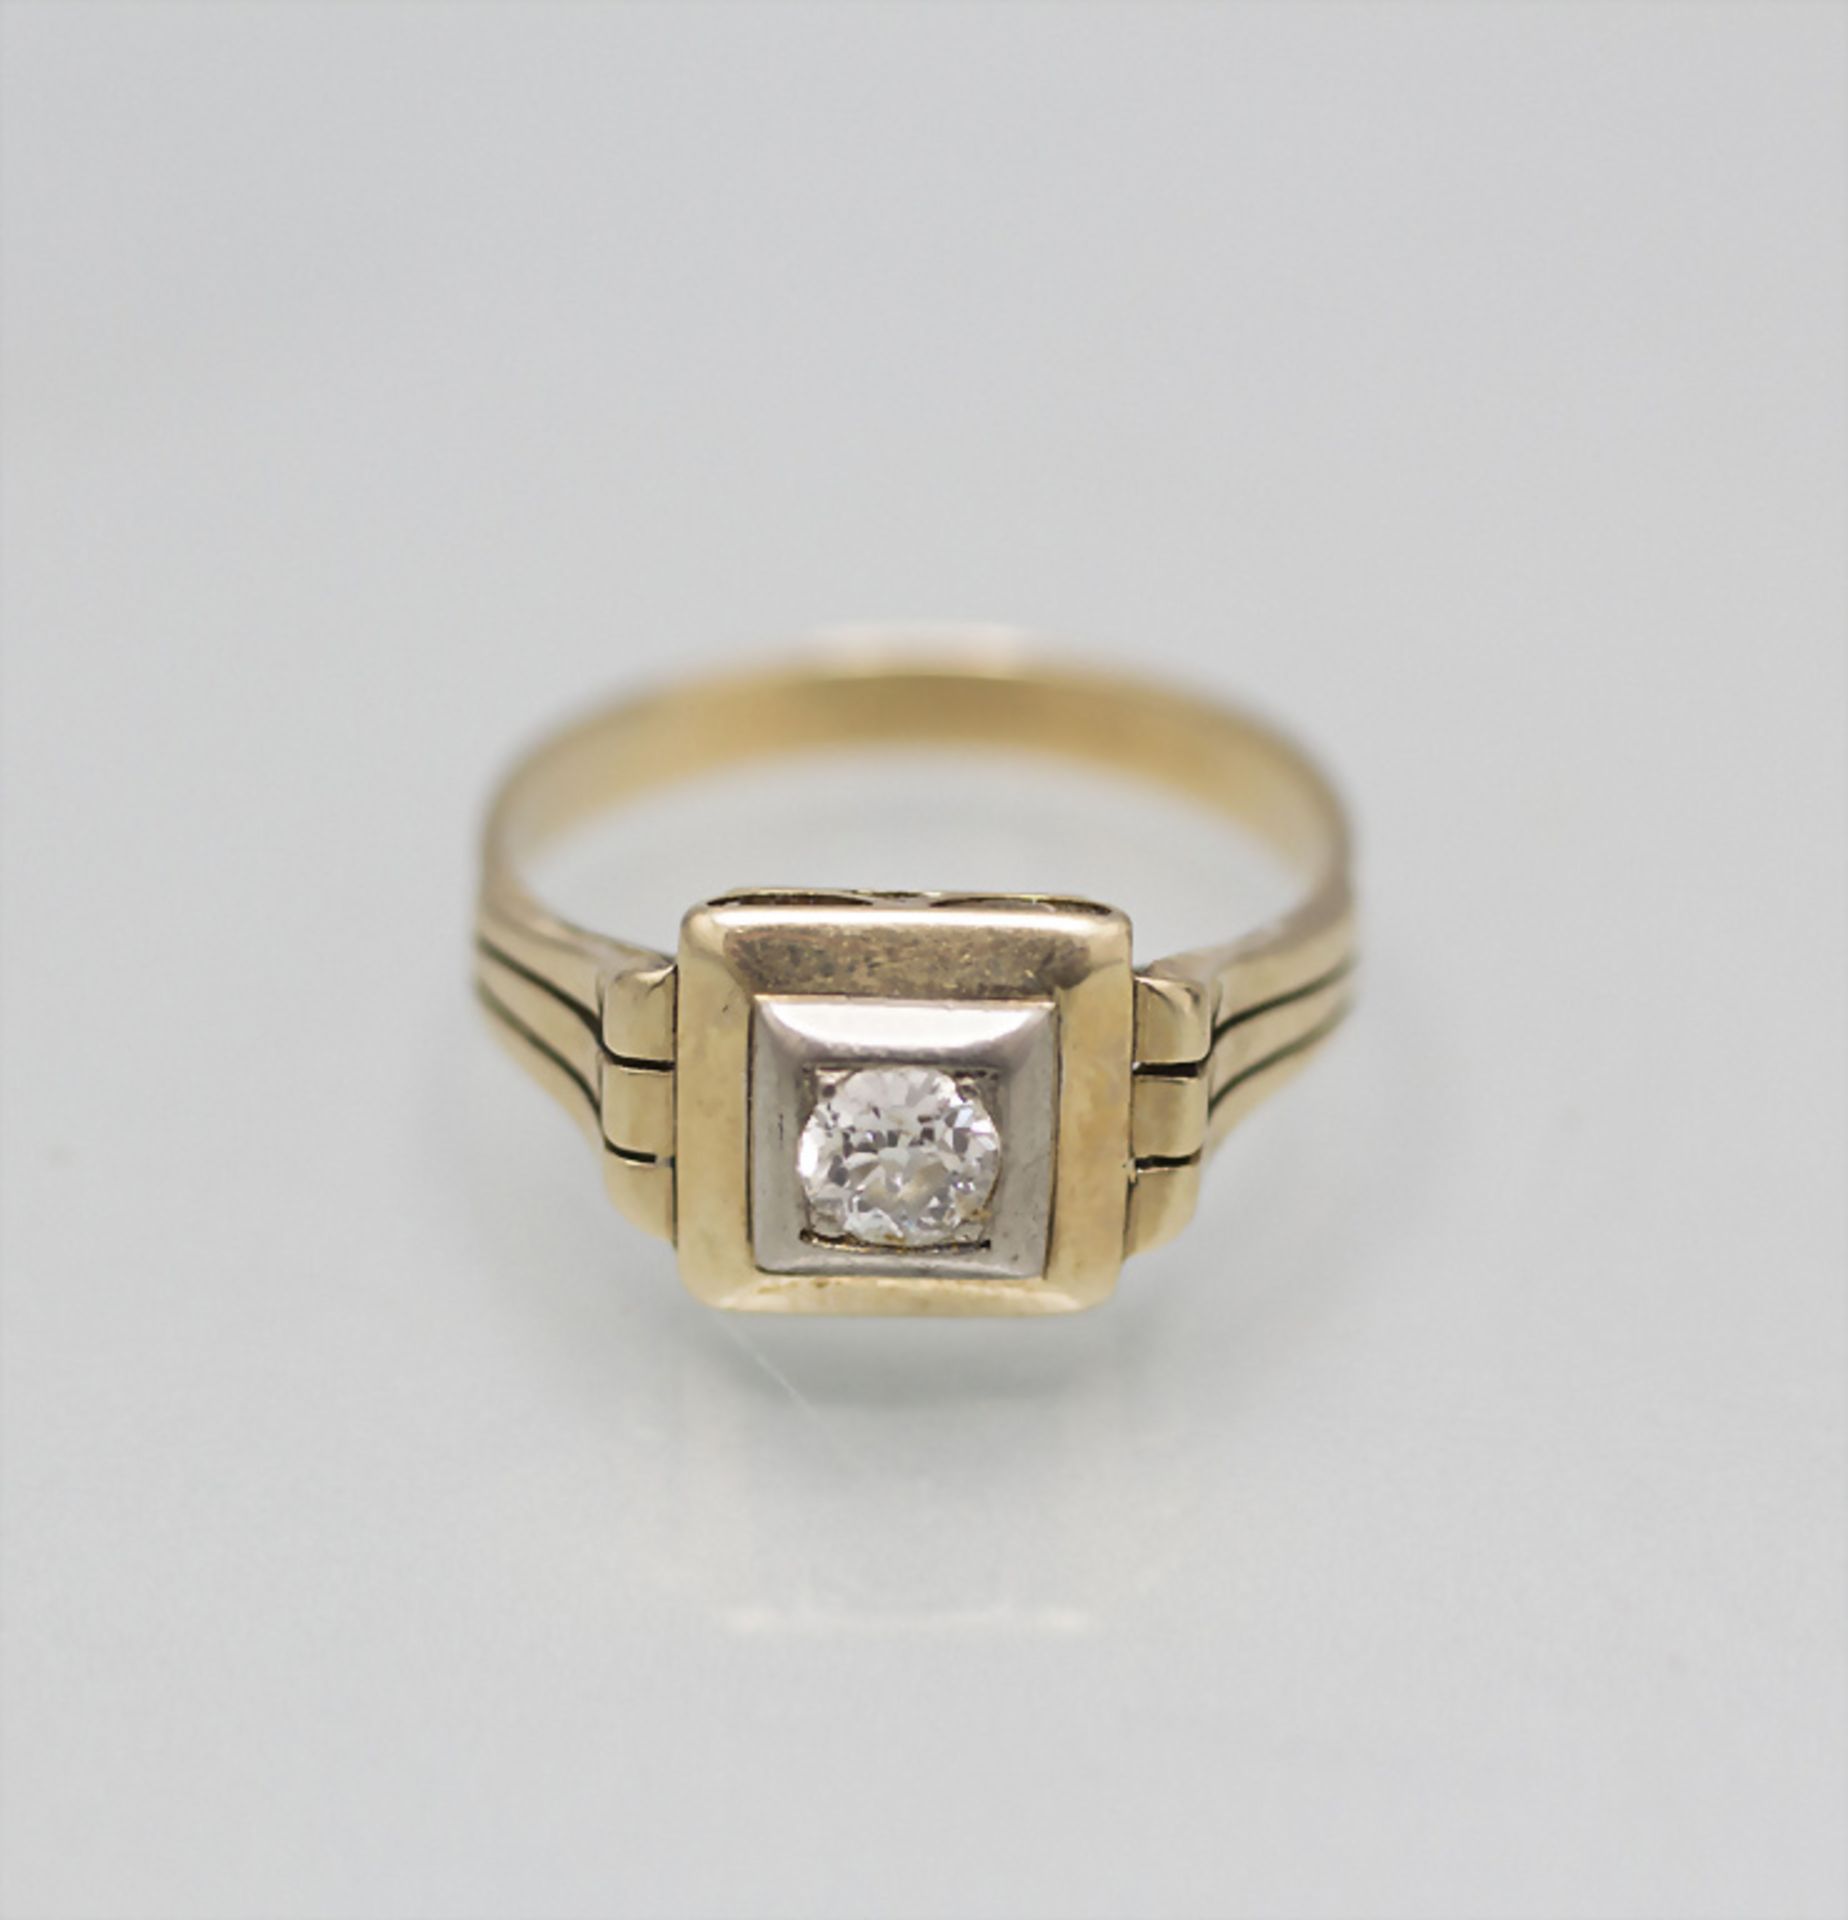 Damenring mit Diamant / A ladies 14 ct gold ring with diamond